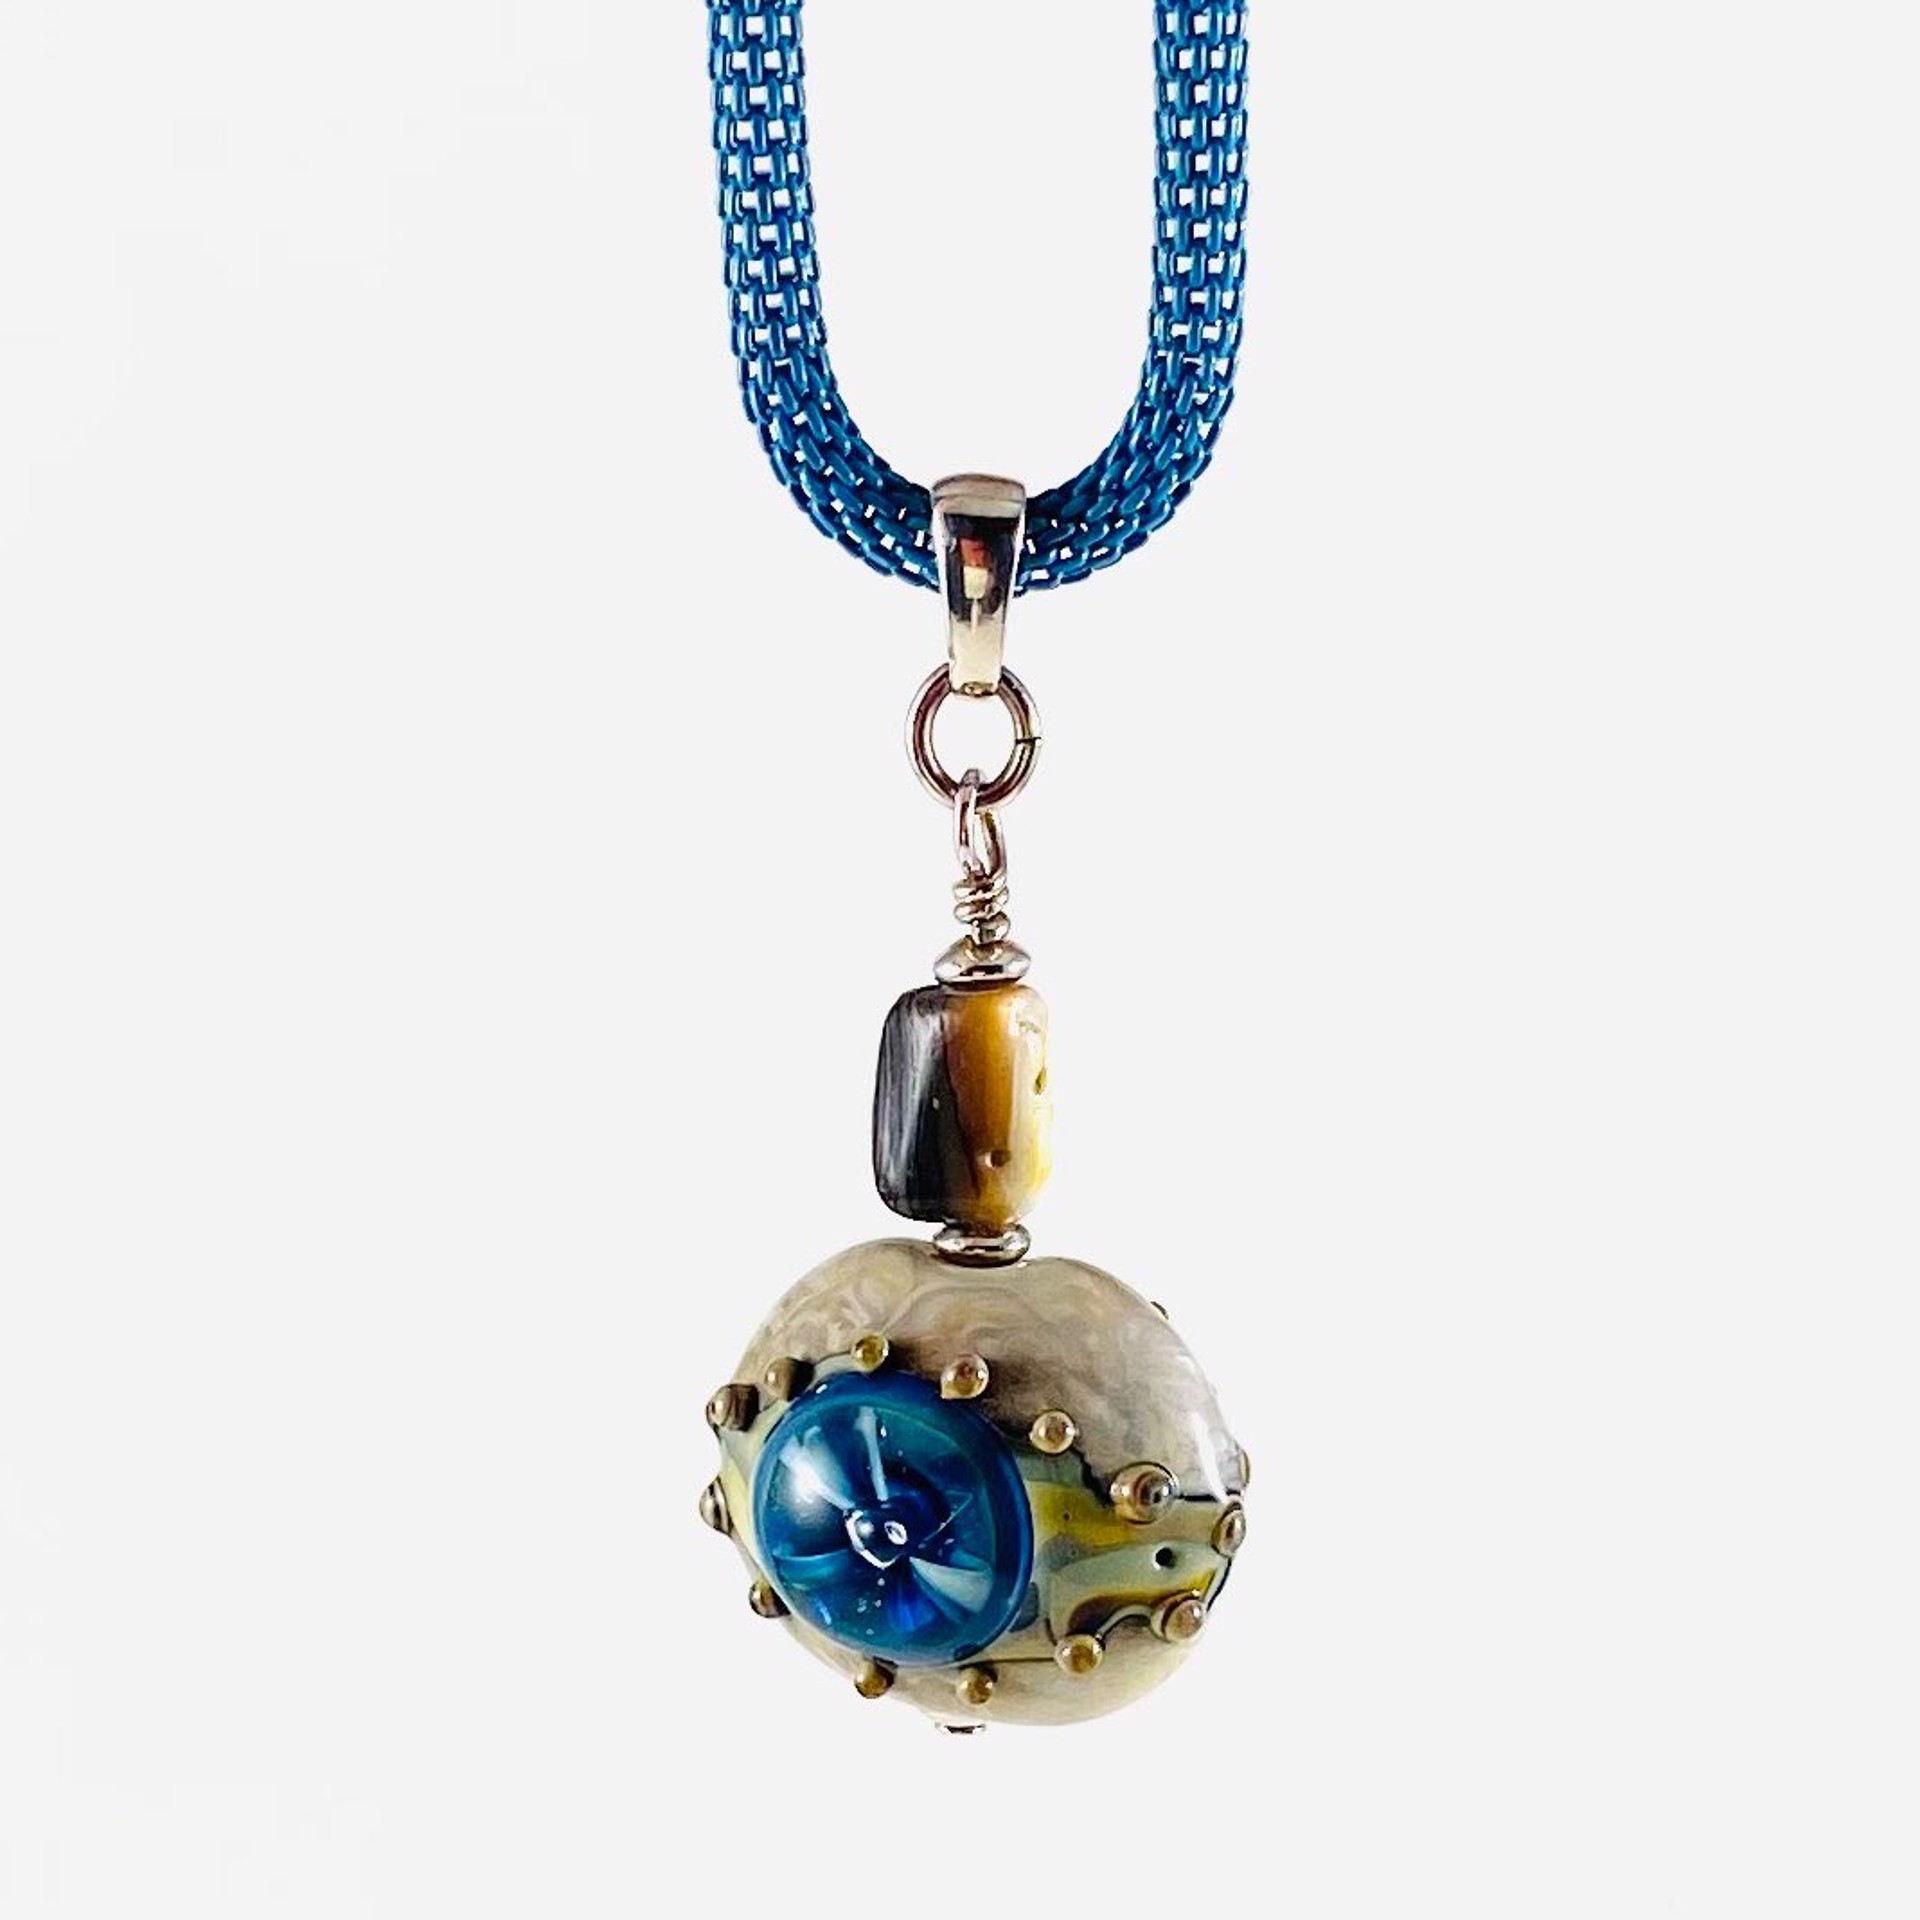 Mermaid Eye Pendant on Turquoise Mesh Chain Necklace LS21-447N by Linda Sacra